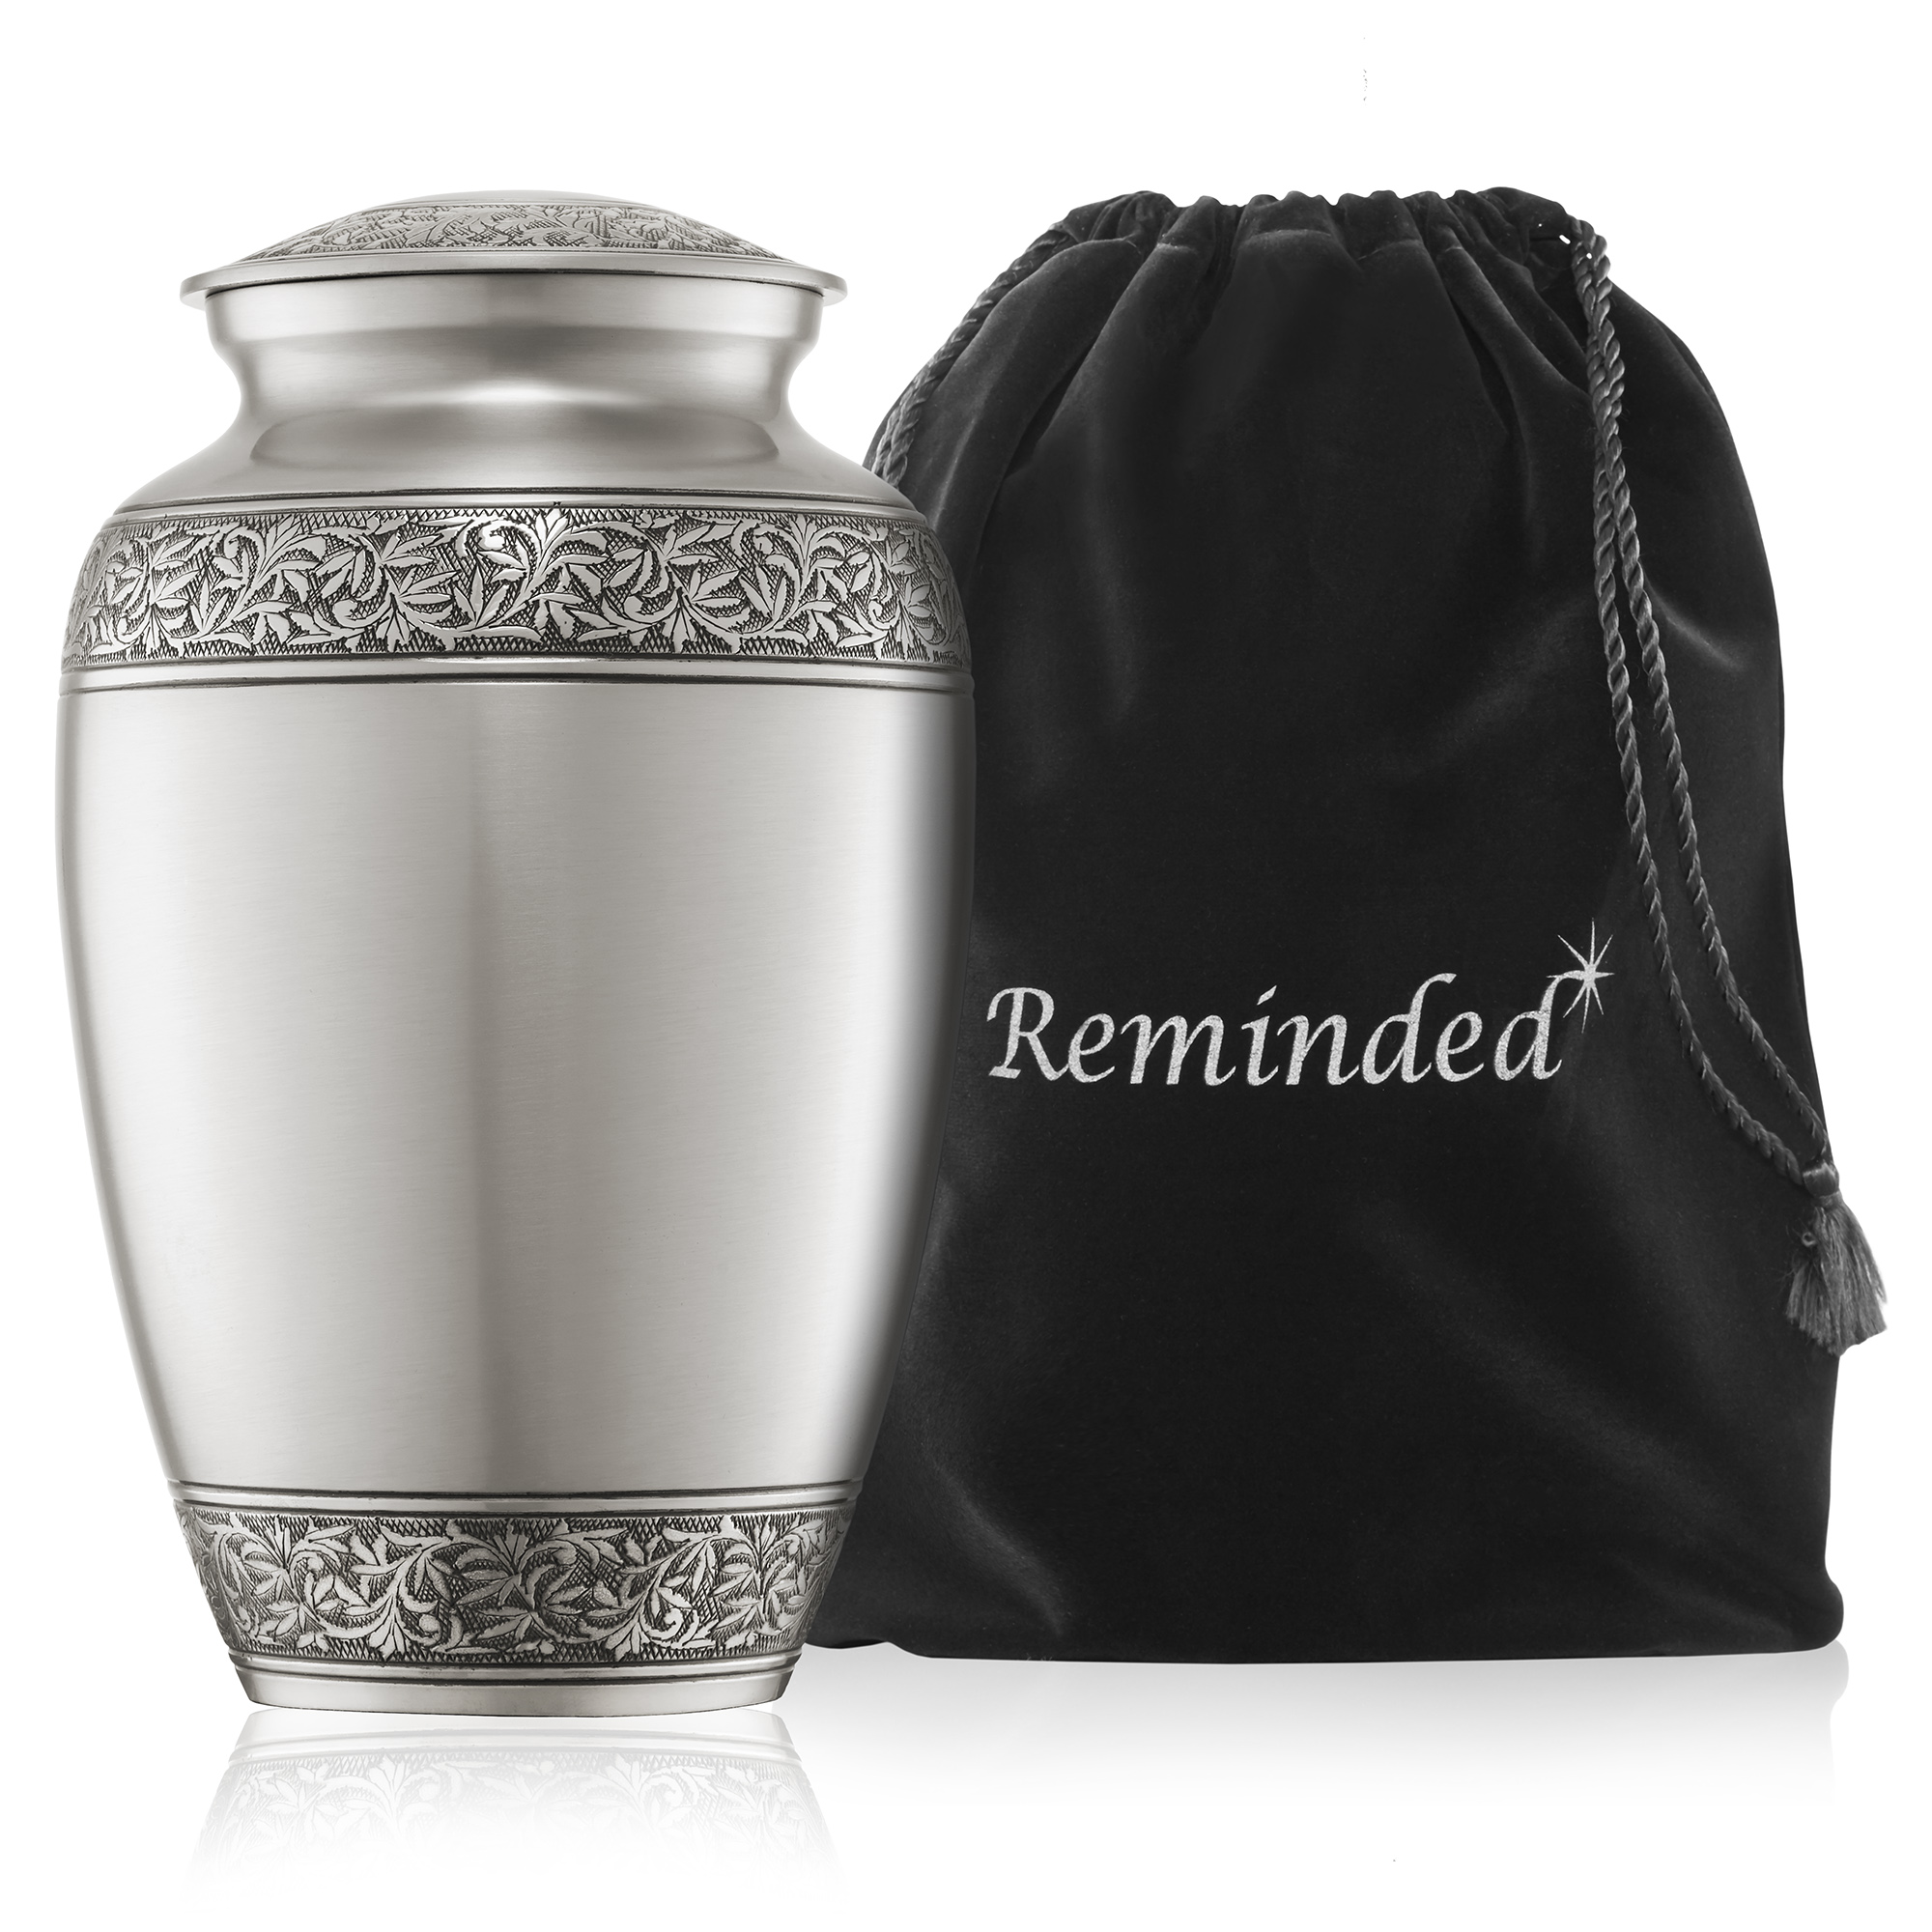 Reminded Adult Cremation Urn for Human Ashes - Silver with Velvet Bag